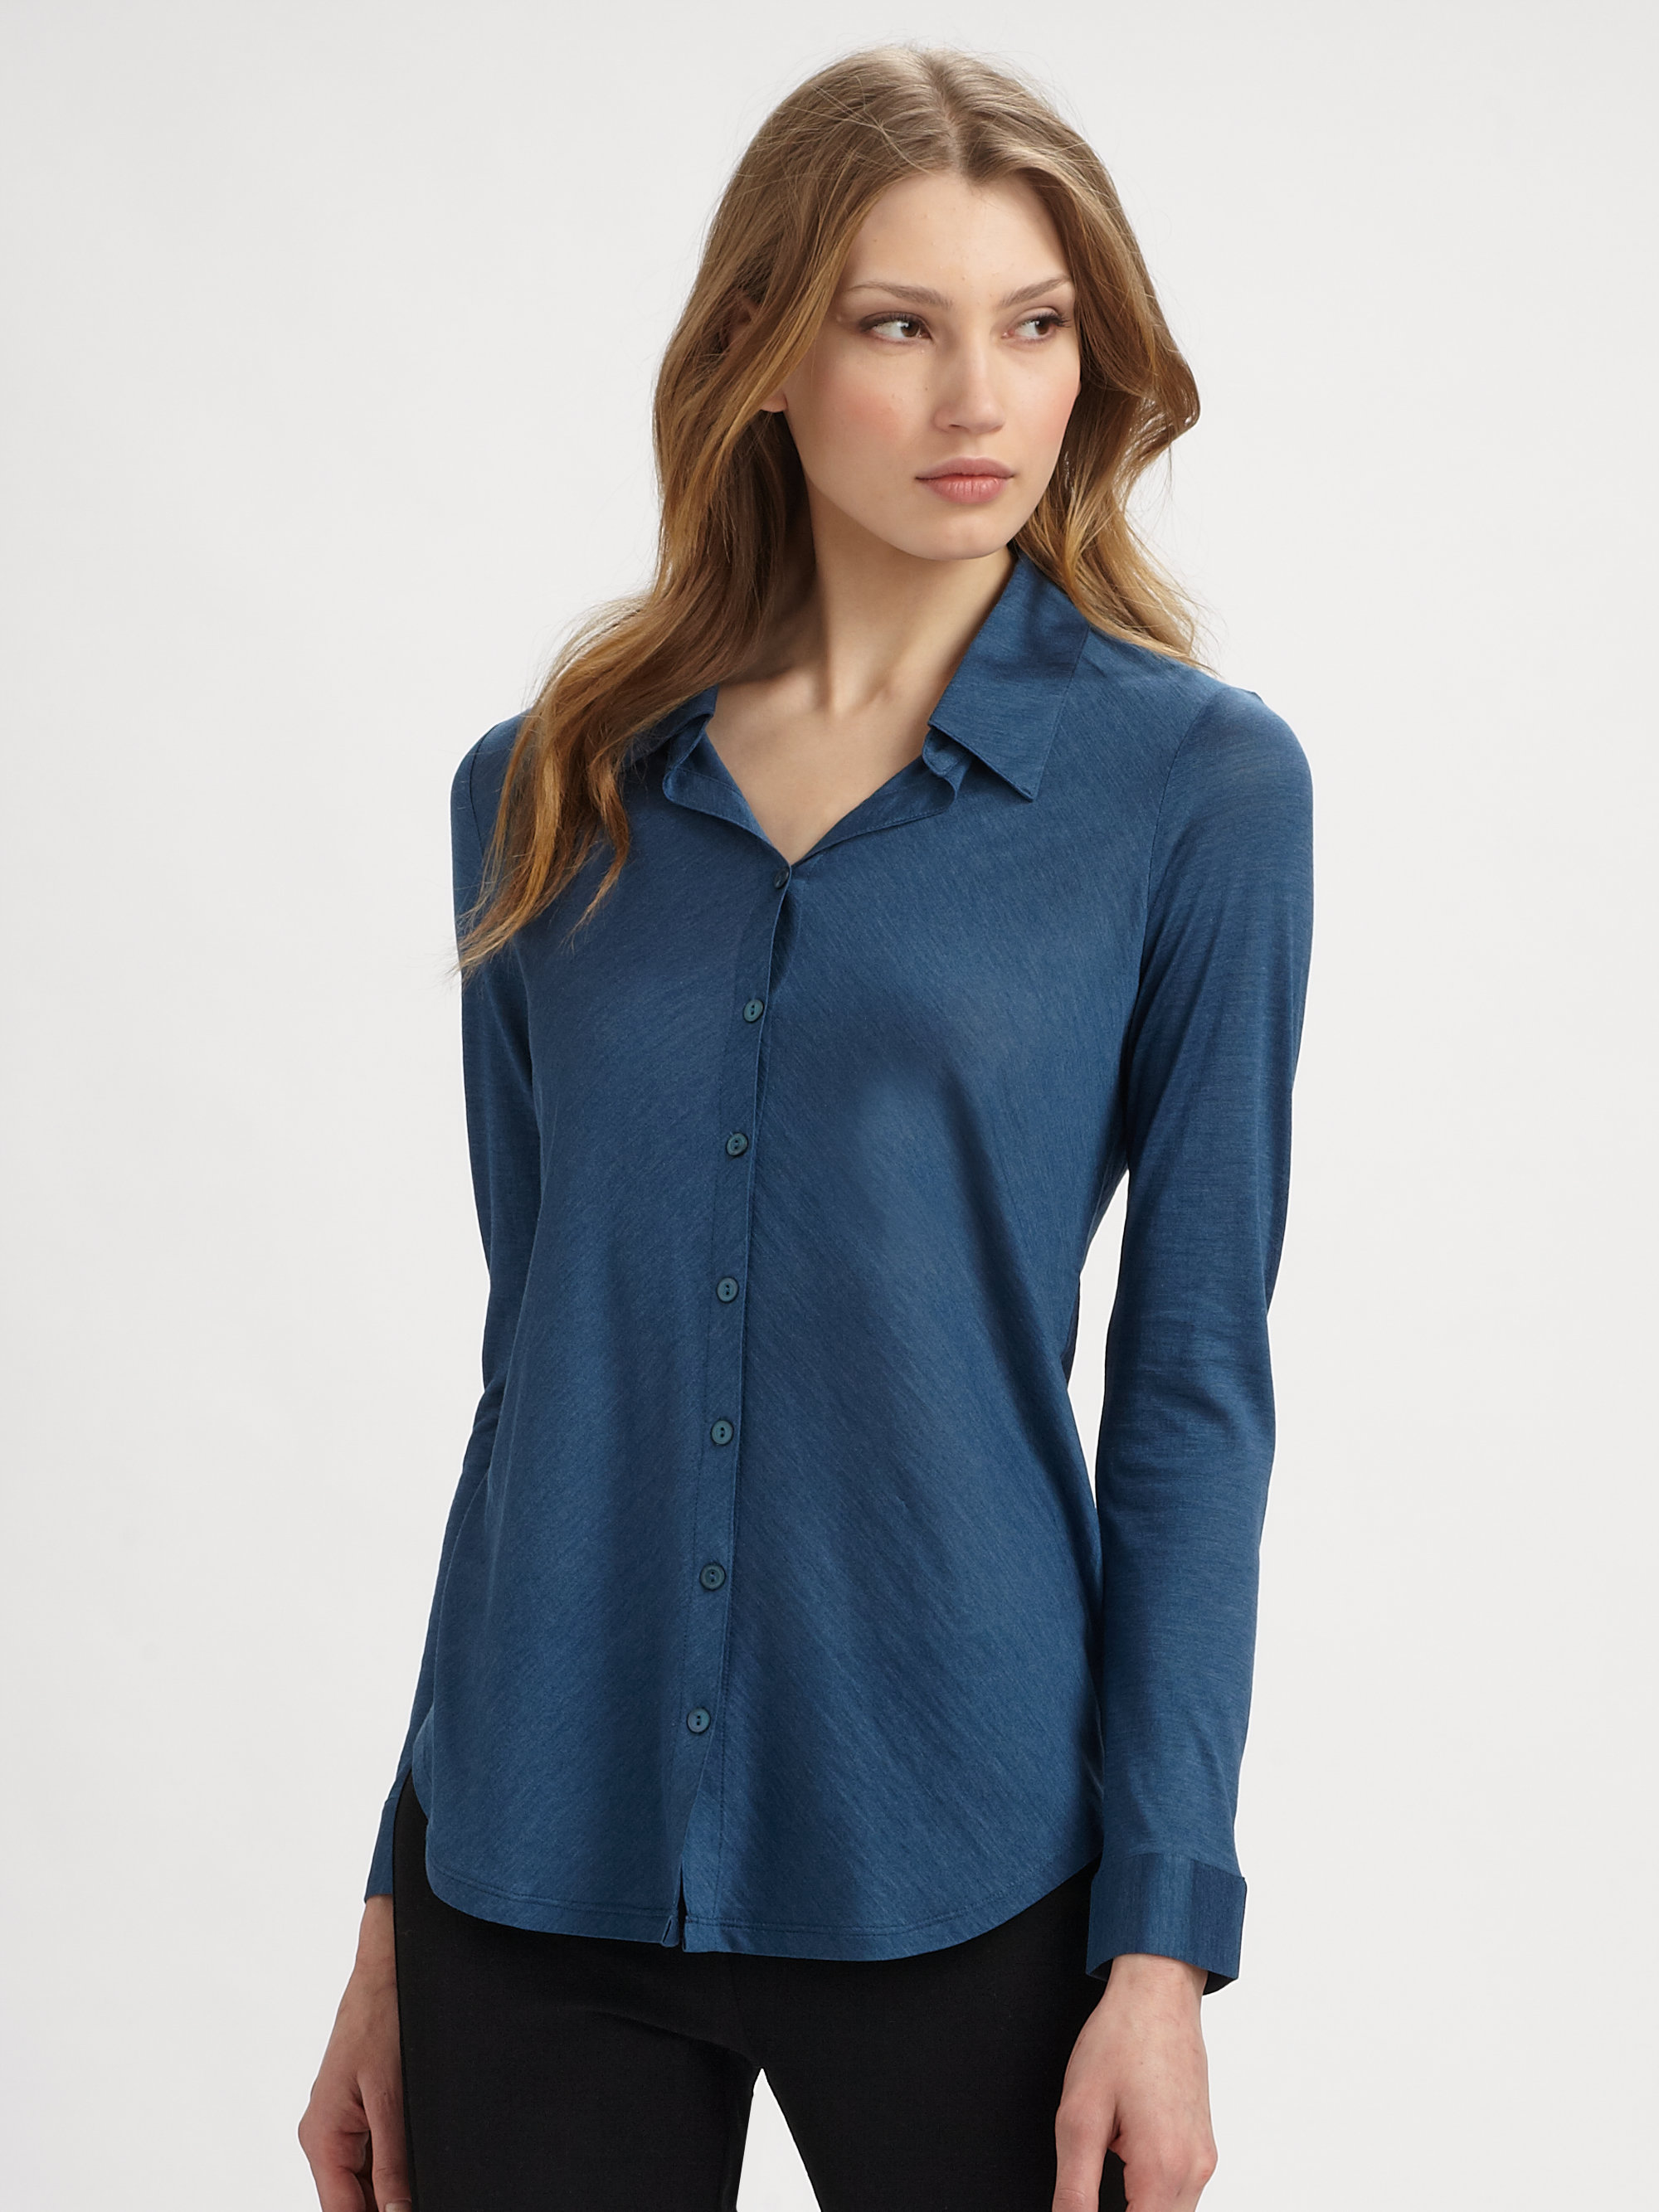 Lyst - Eileen Fisher Silkcotton Buttondown Shirt in Blue